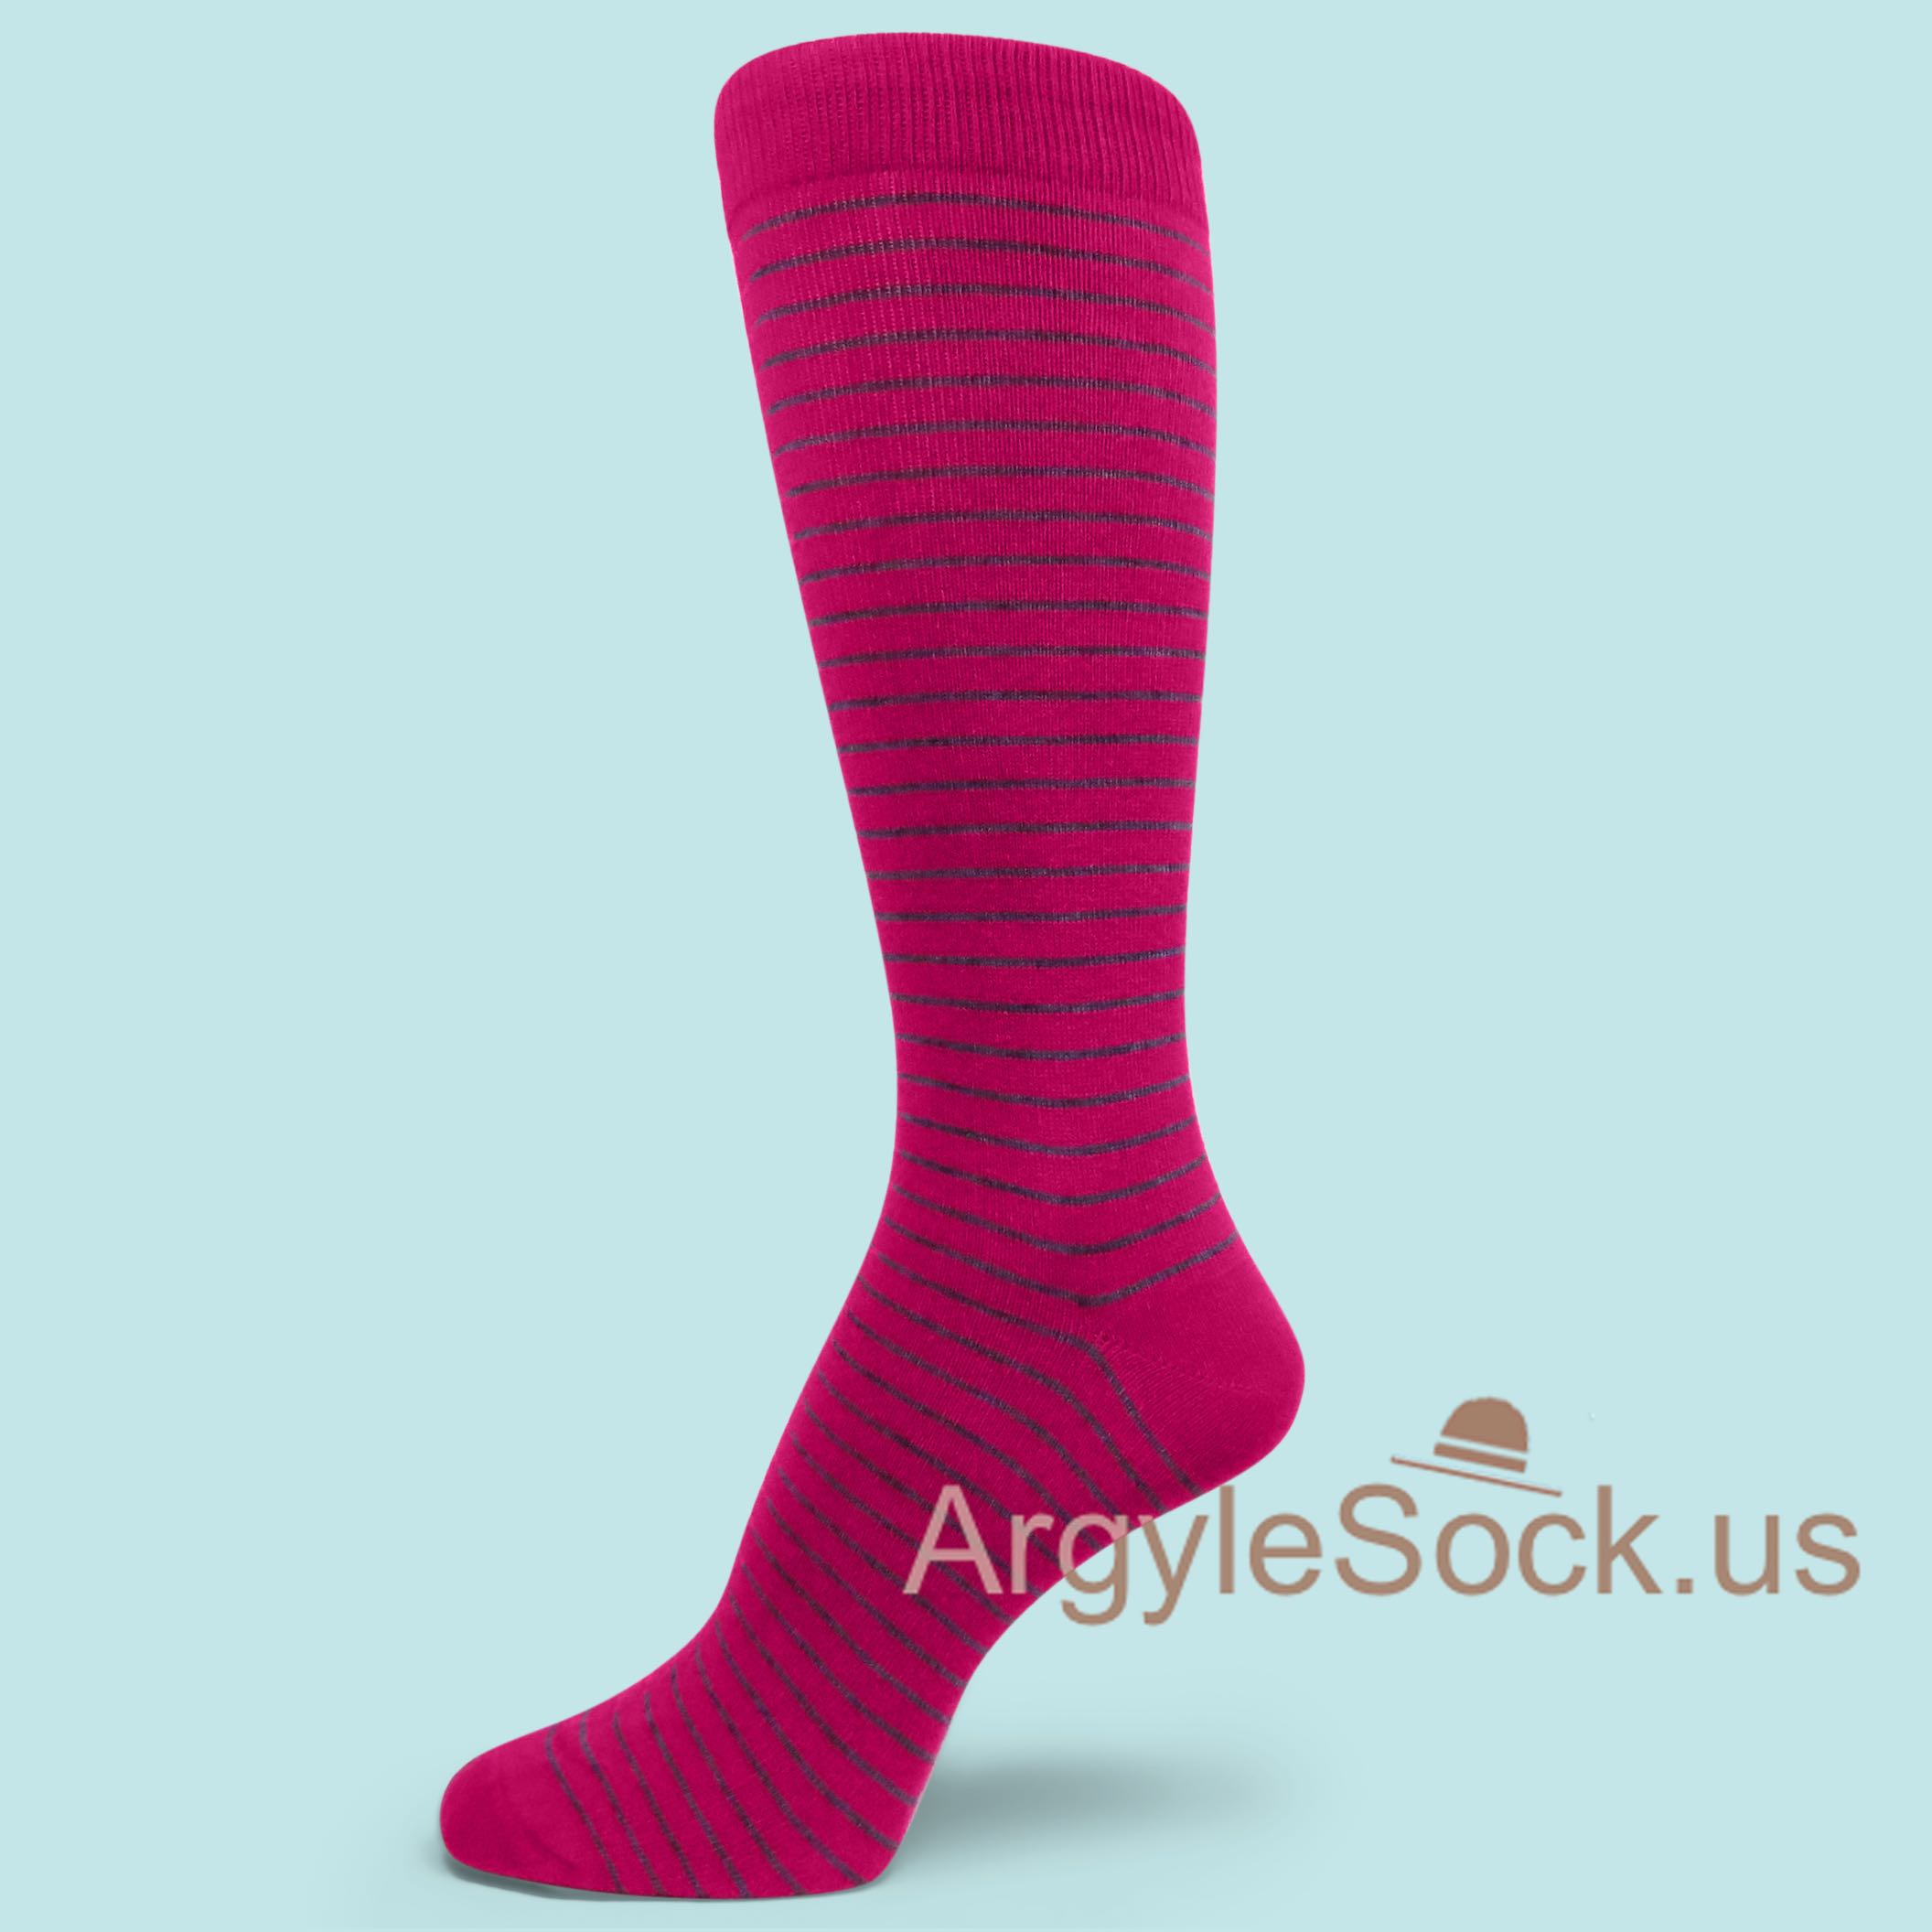 Hot Pink with Thin Dark/Charcoal Grey Striped Mens Dress Socks